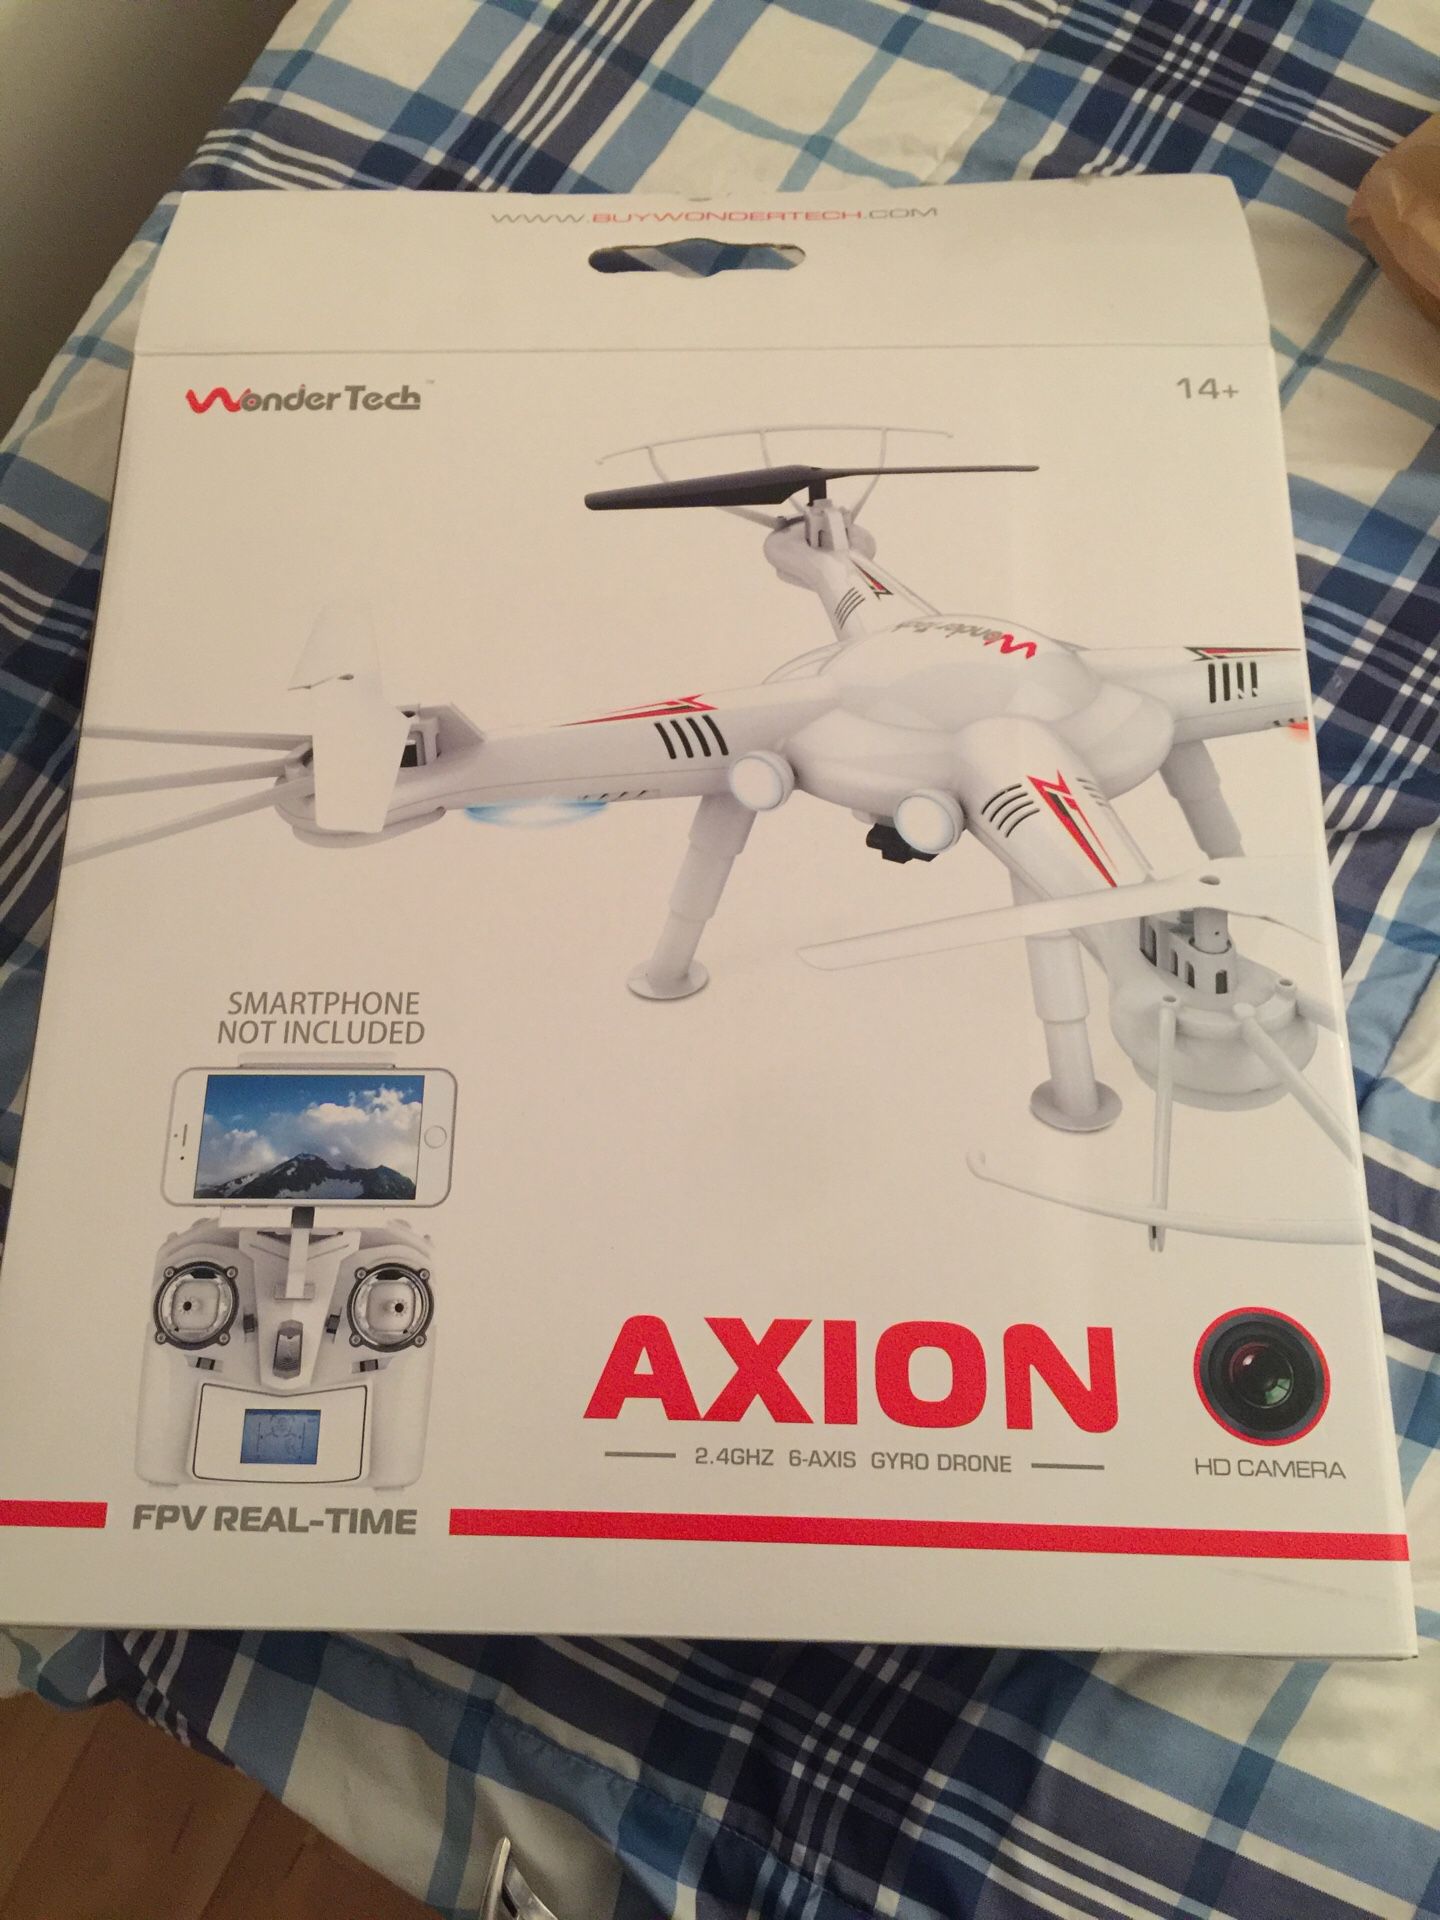 WonderTech Axion drone